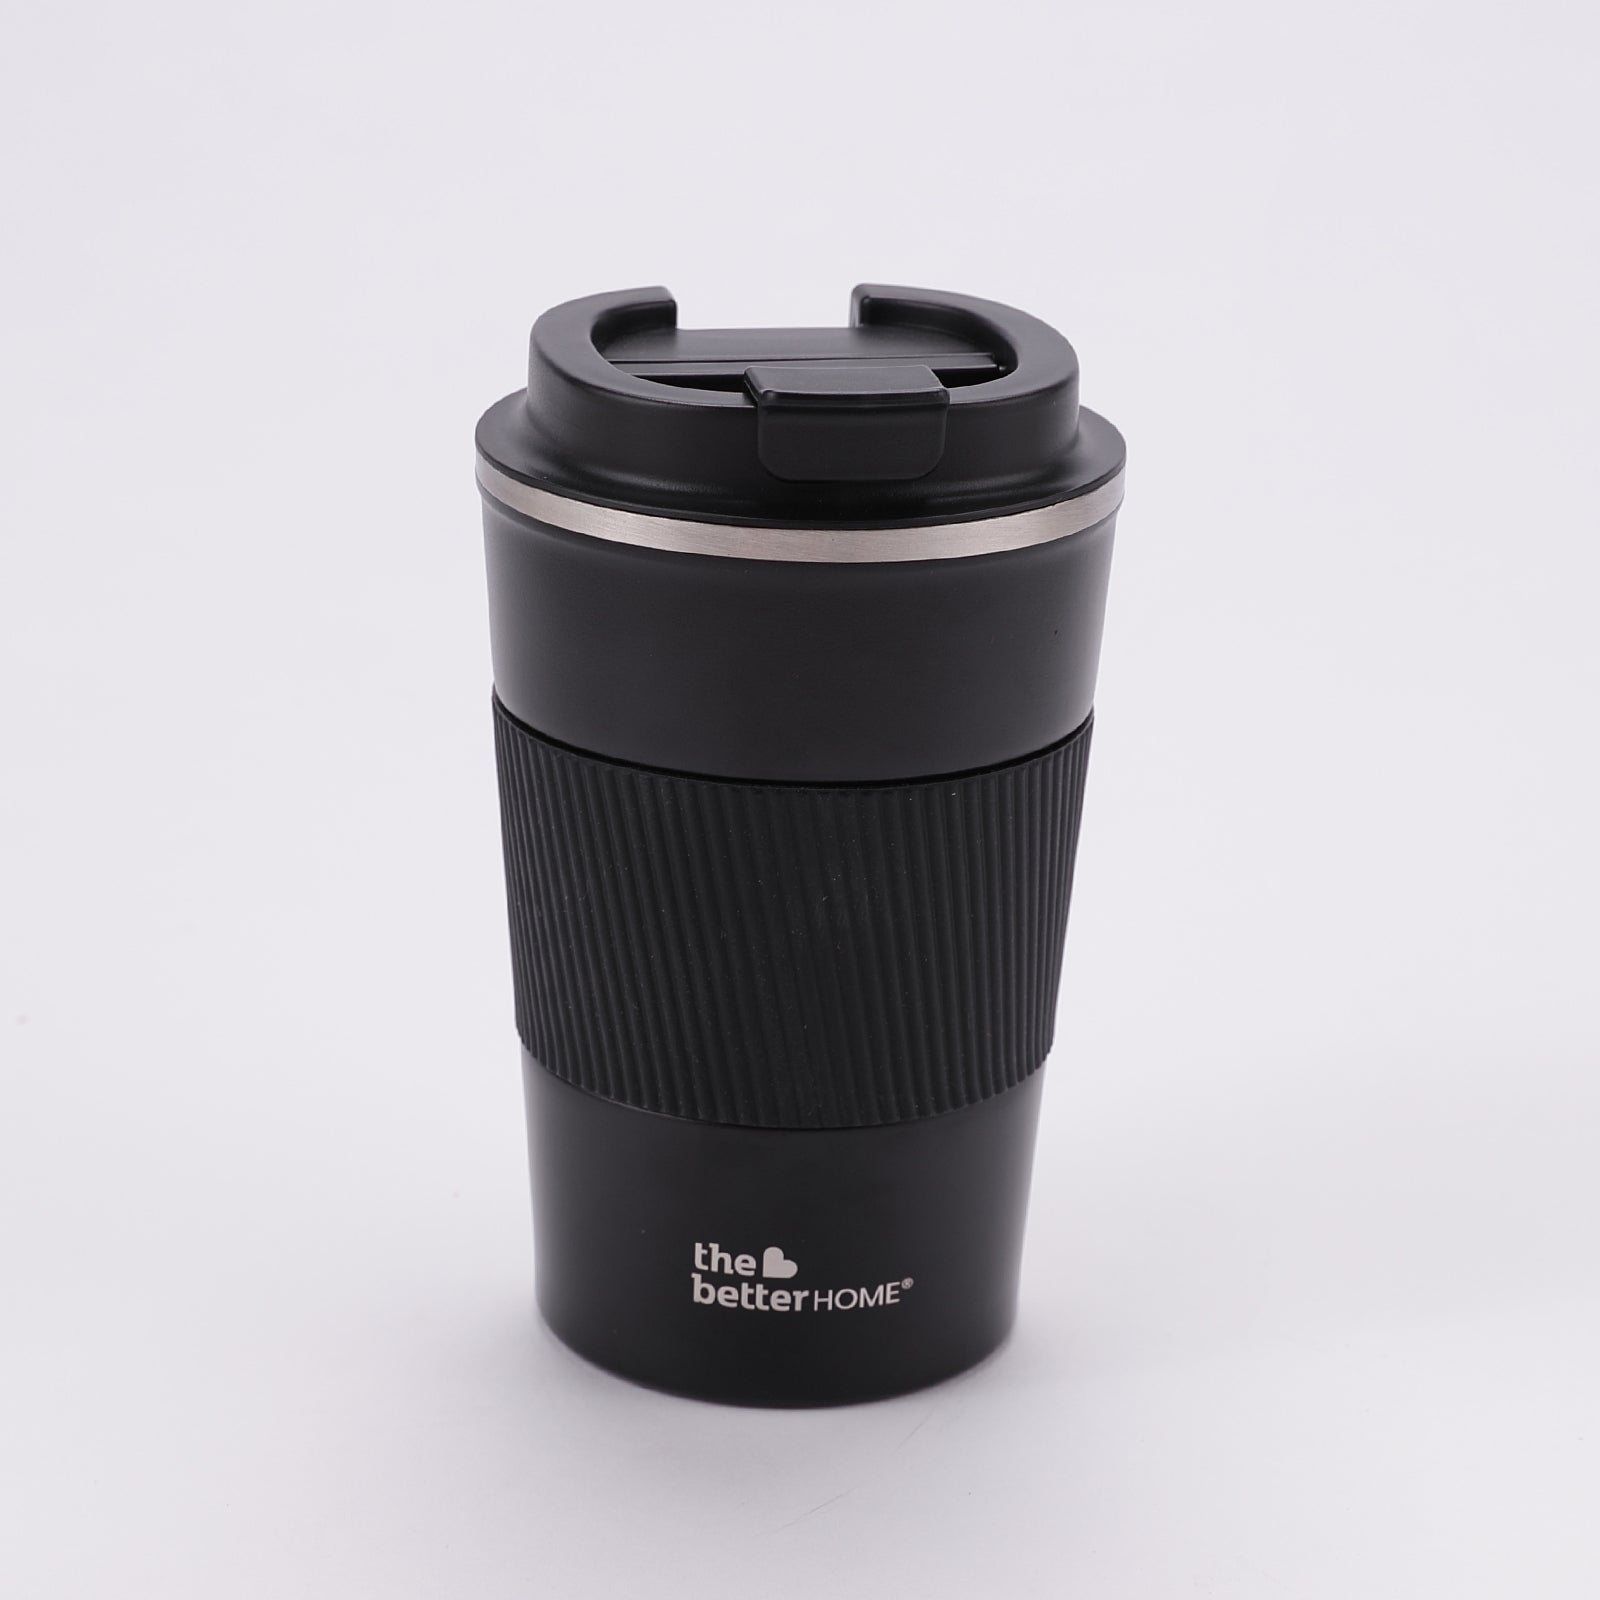 Rage Coffee - Stainless Steel Insulated Coffee Mug with Sleeve - Black - 380ml product image